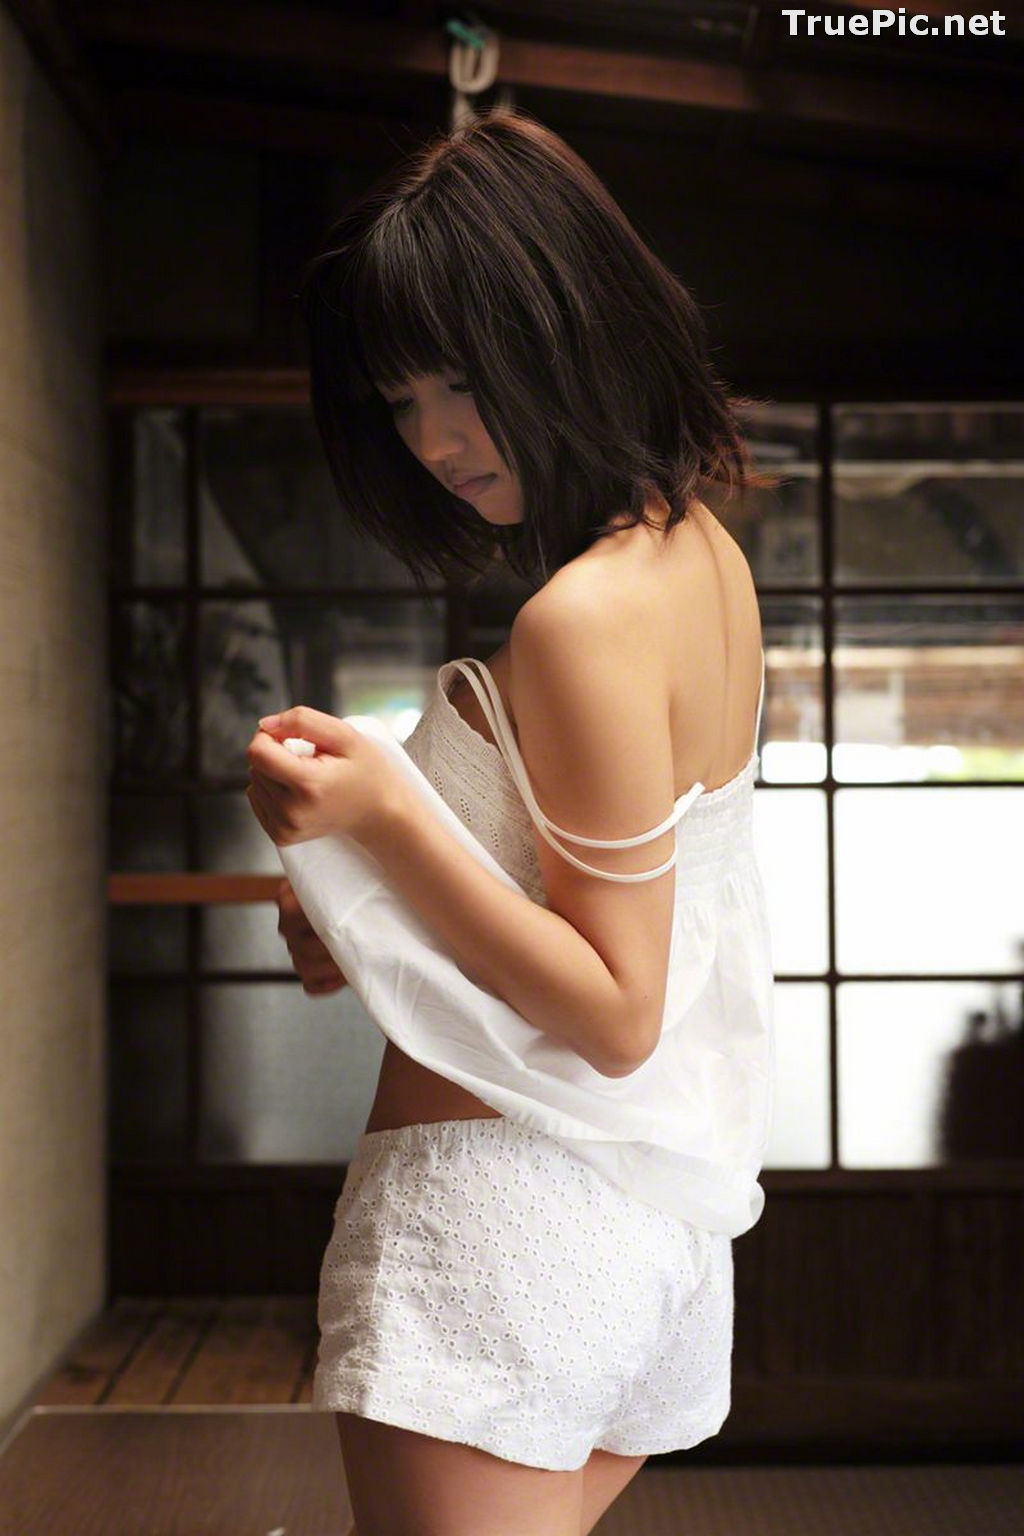 Image Wanibooks No.130 - Japanese Idol Singer and Actress - Erina Mano - TruePic.net - Picture-100